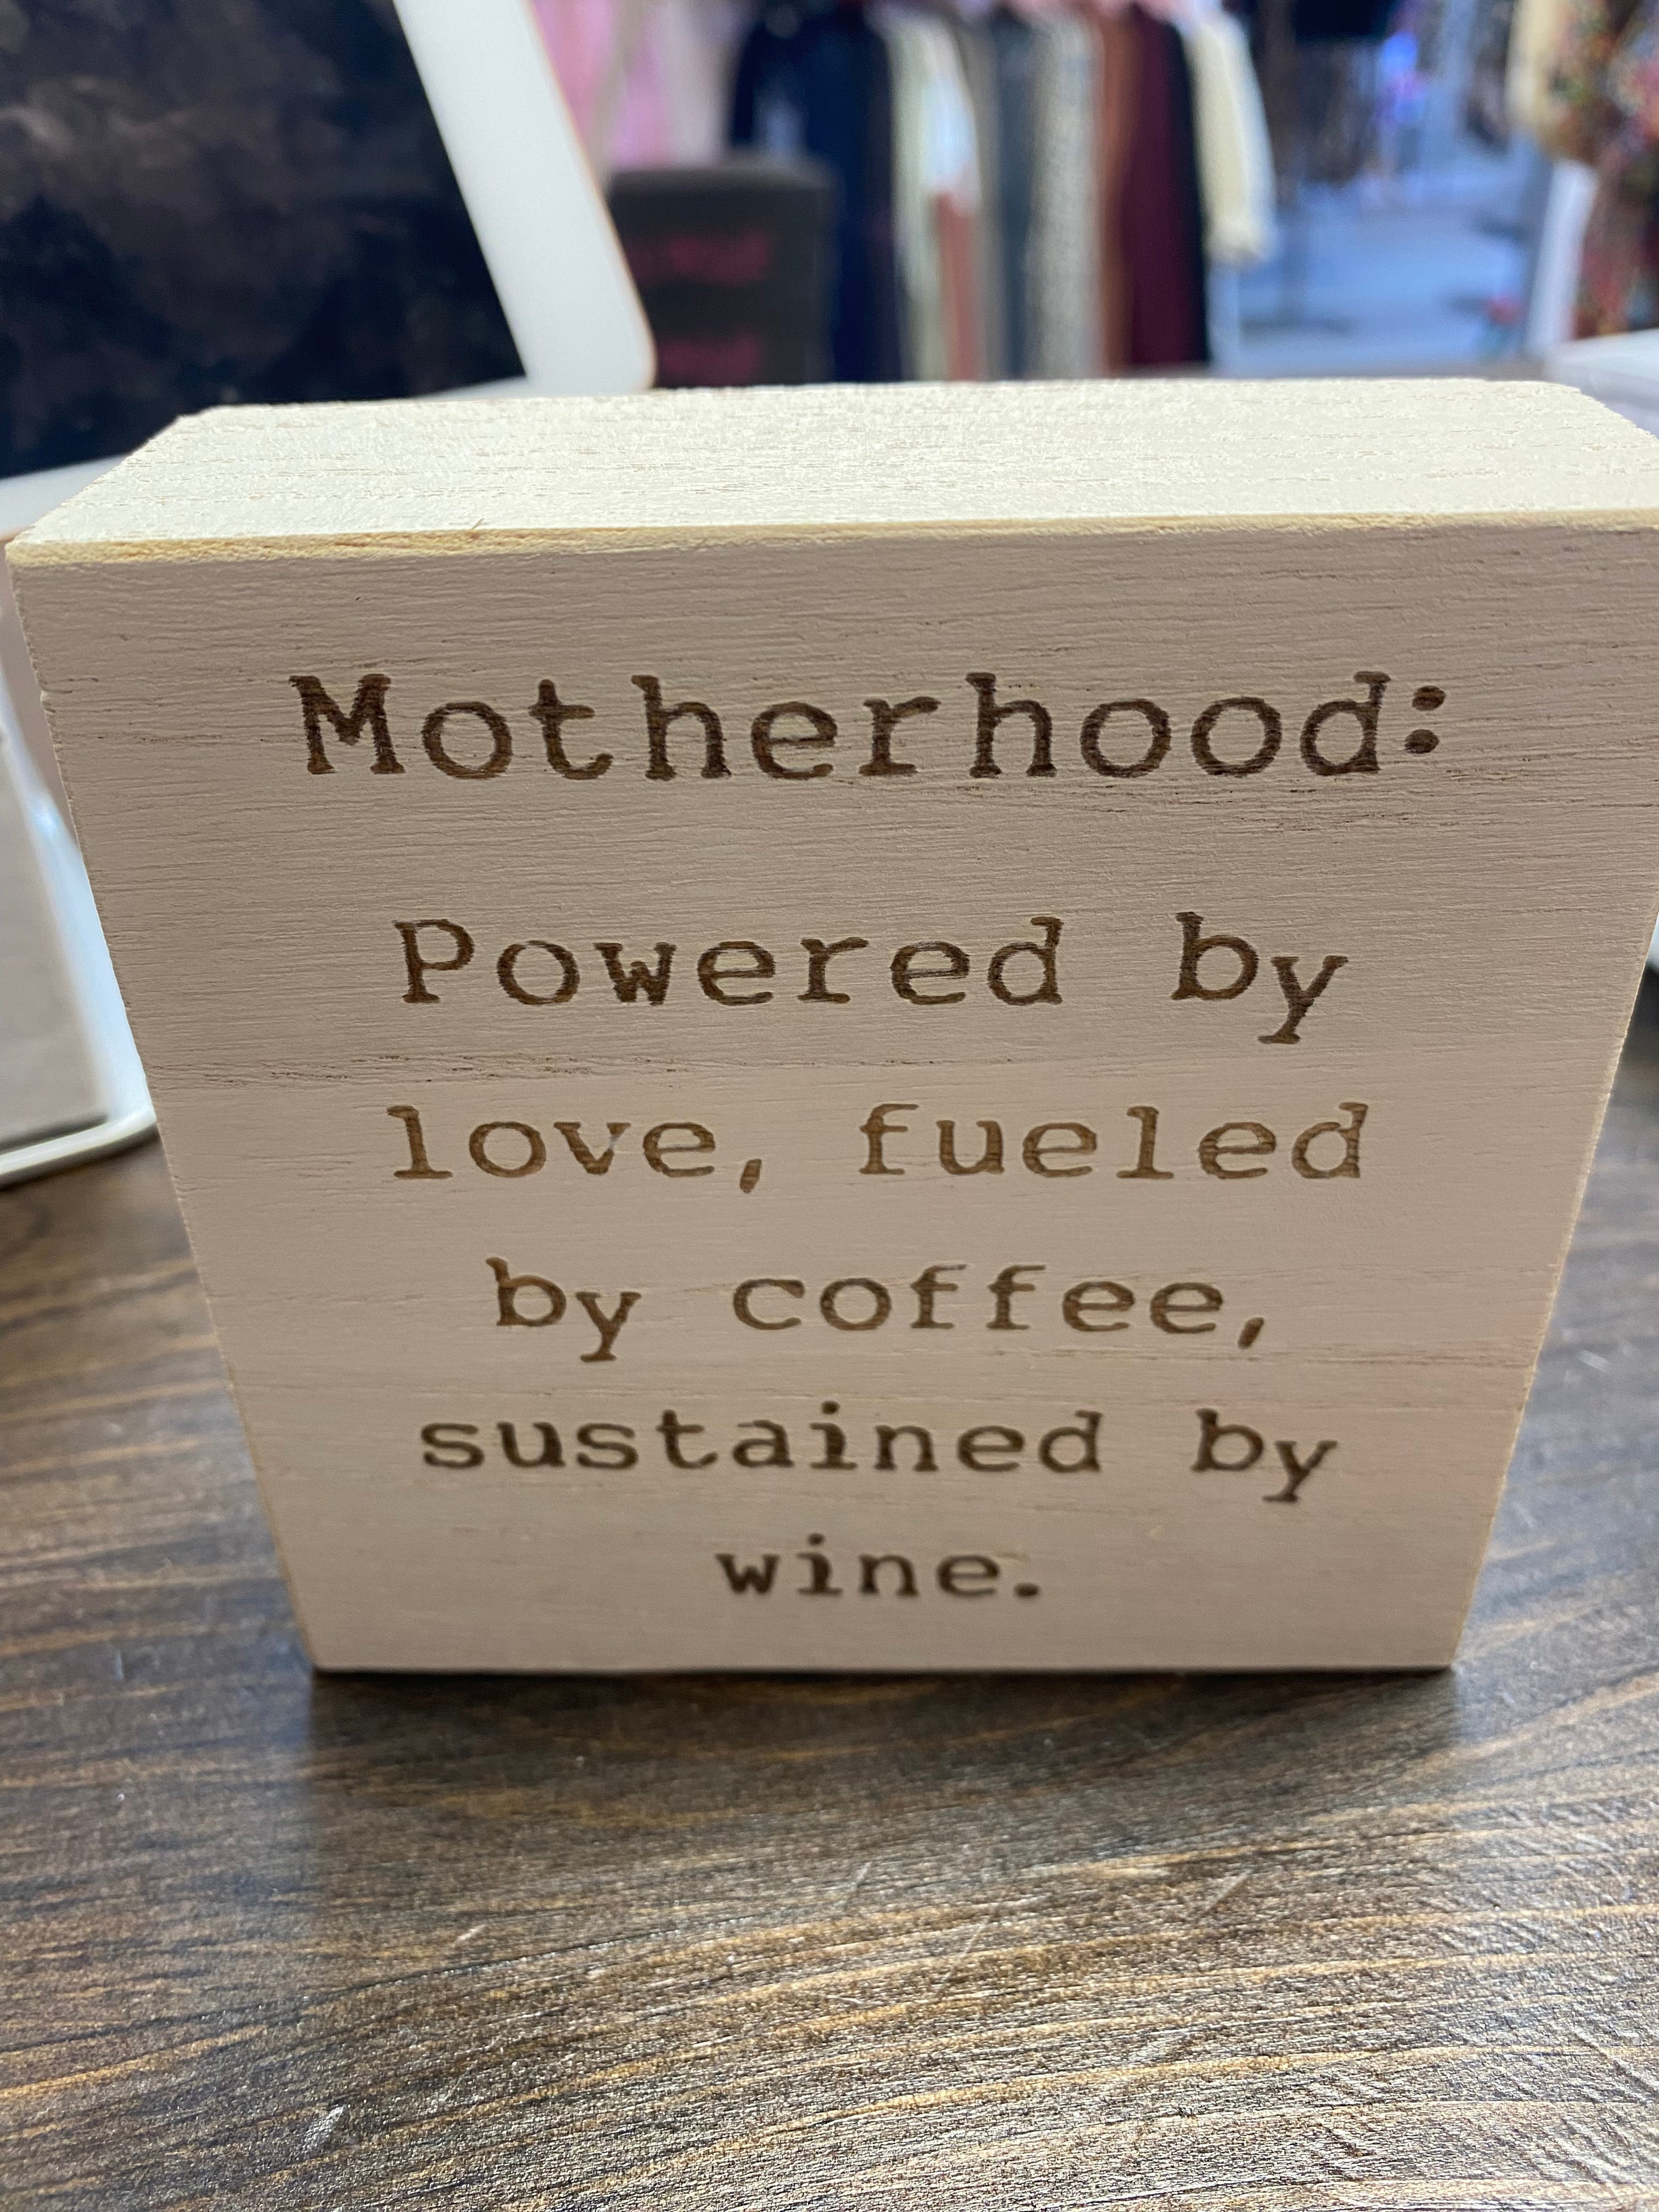 Motherhood sign